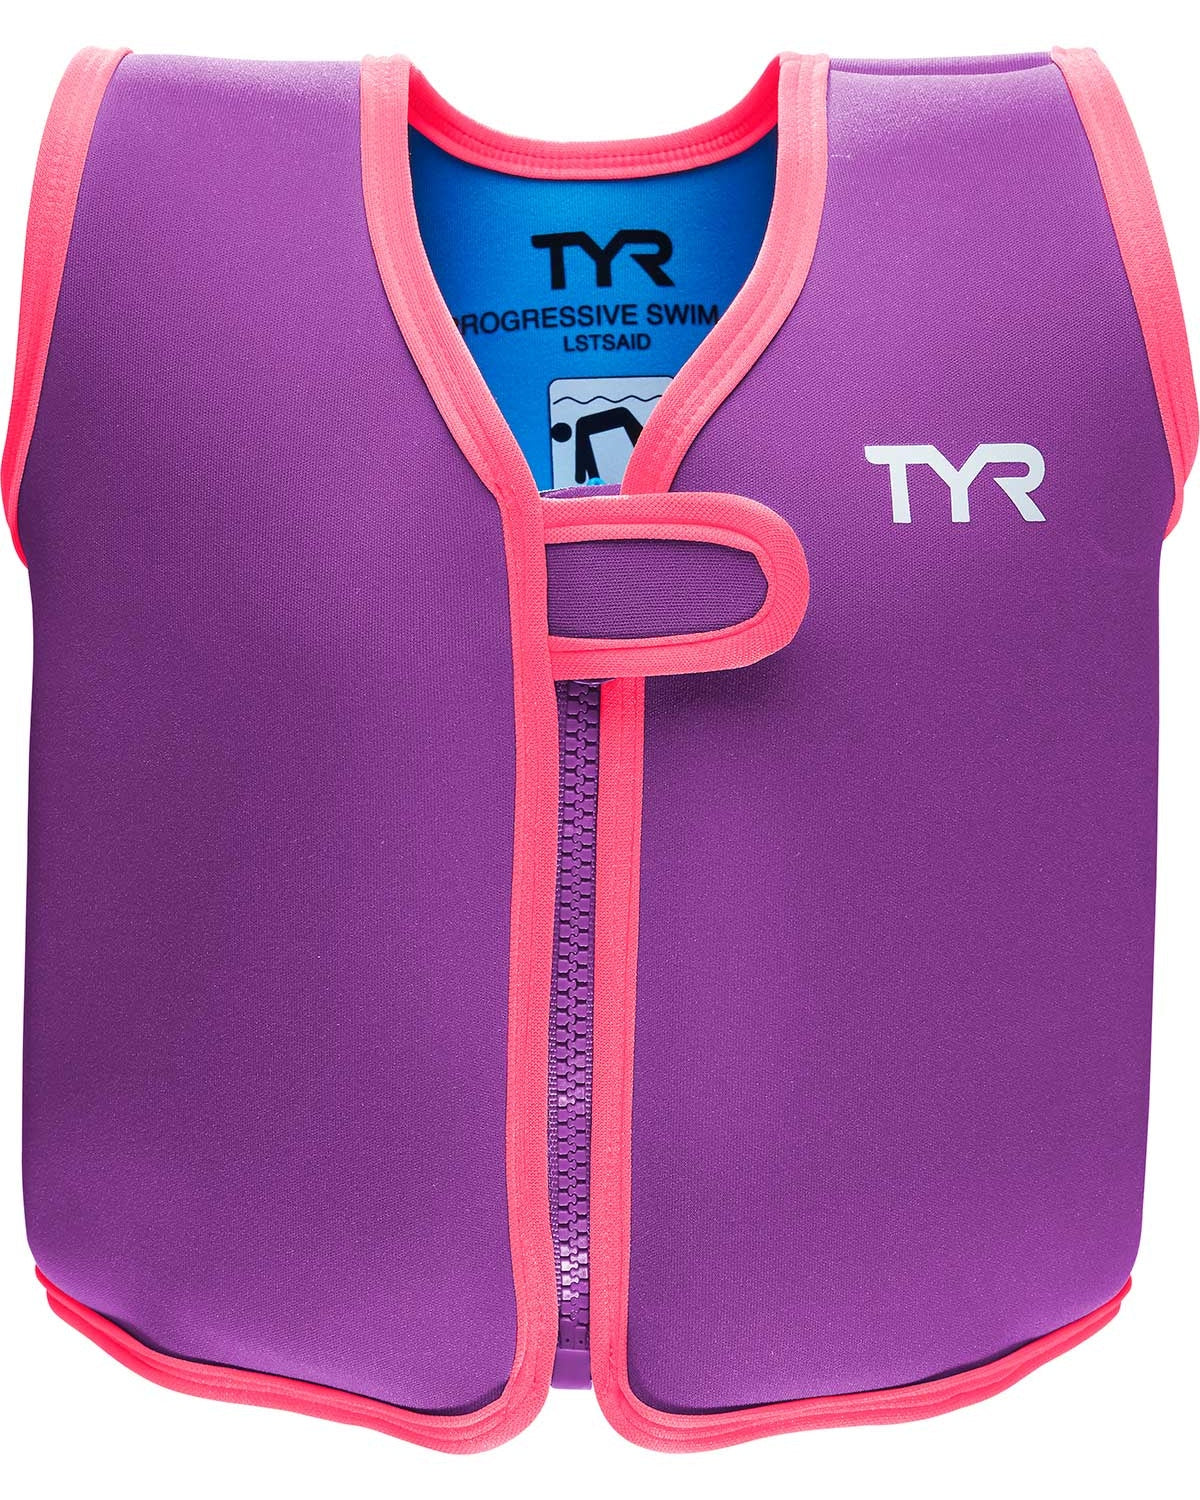 TYR Progressive Swim Aid Equipment TYR Small Purple 